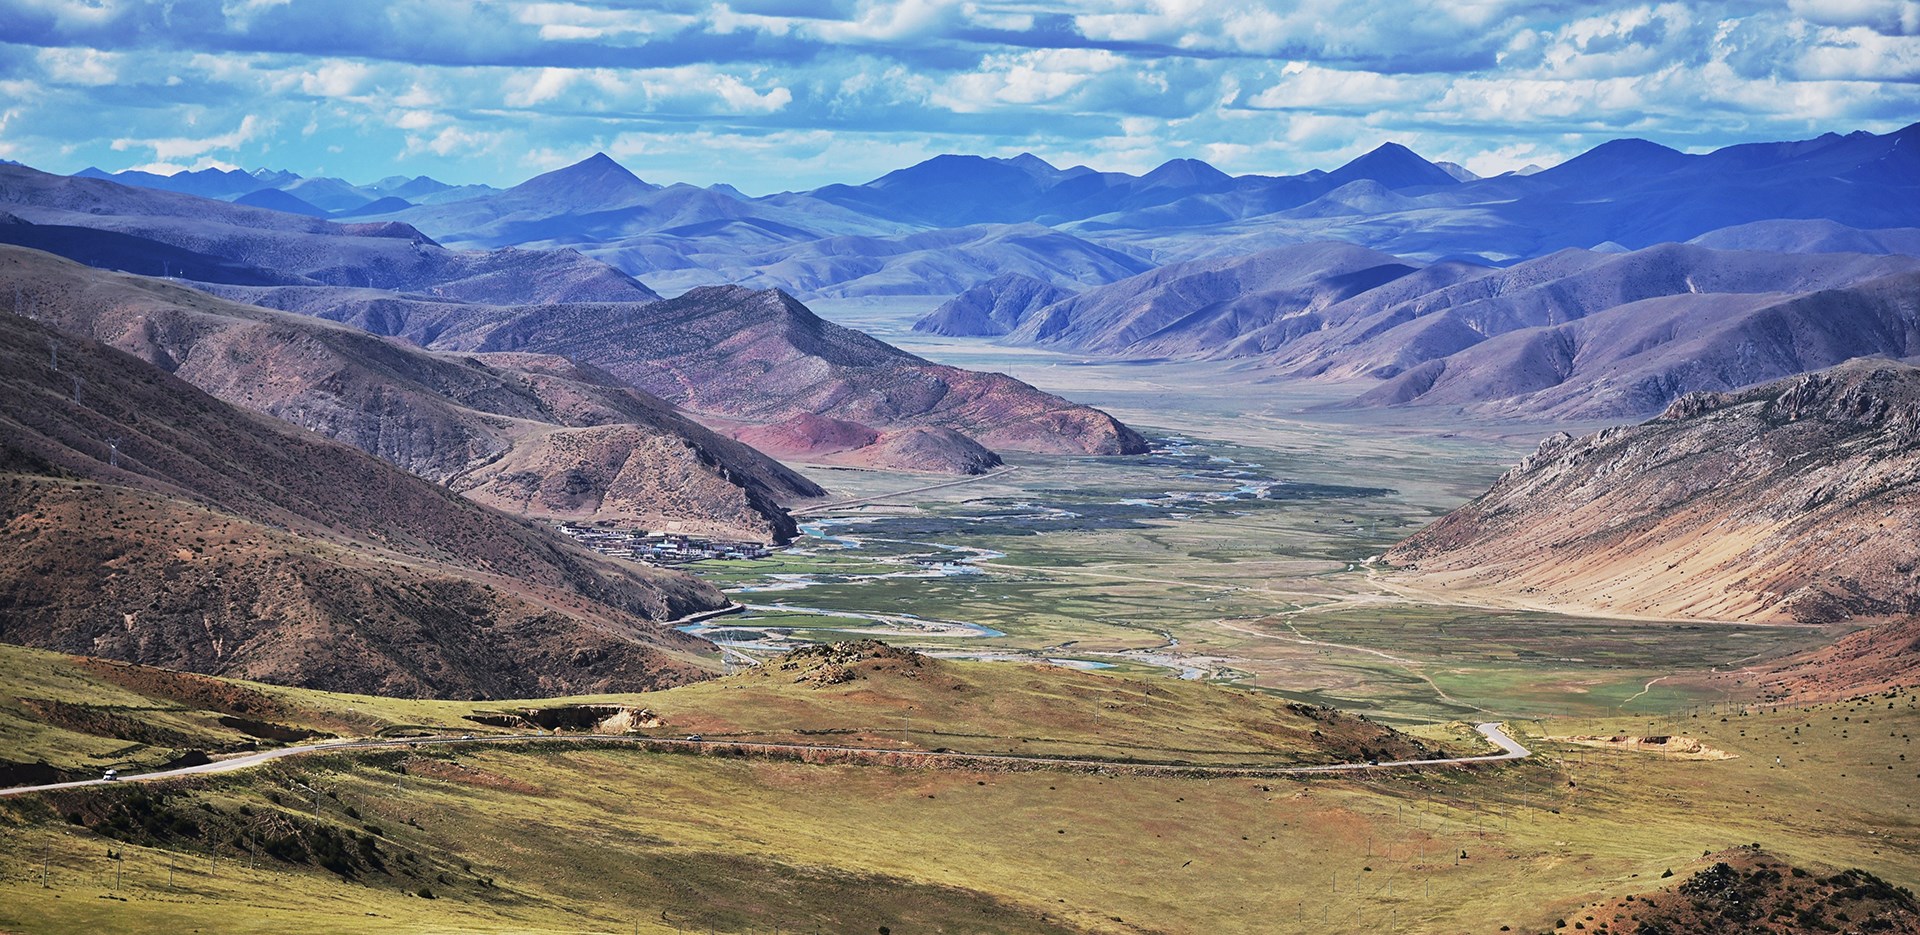 Rental Car Tour from Sichuan via Yunnan to Tibet